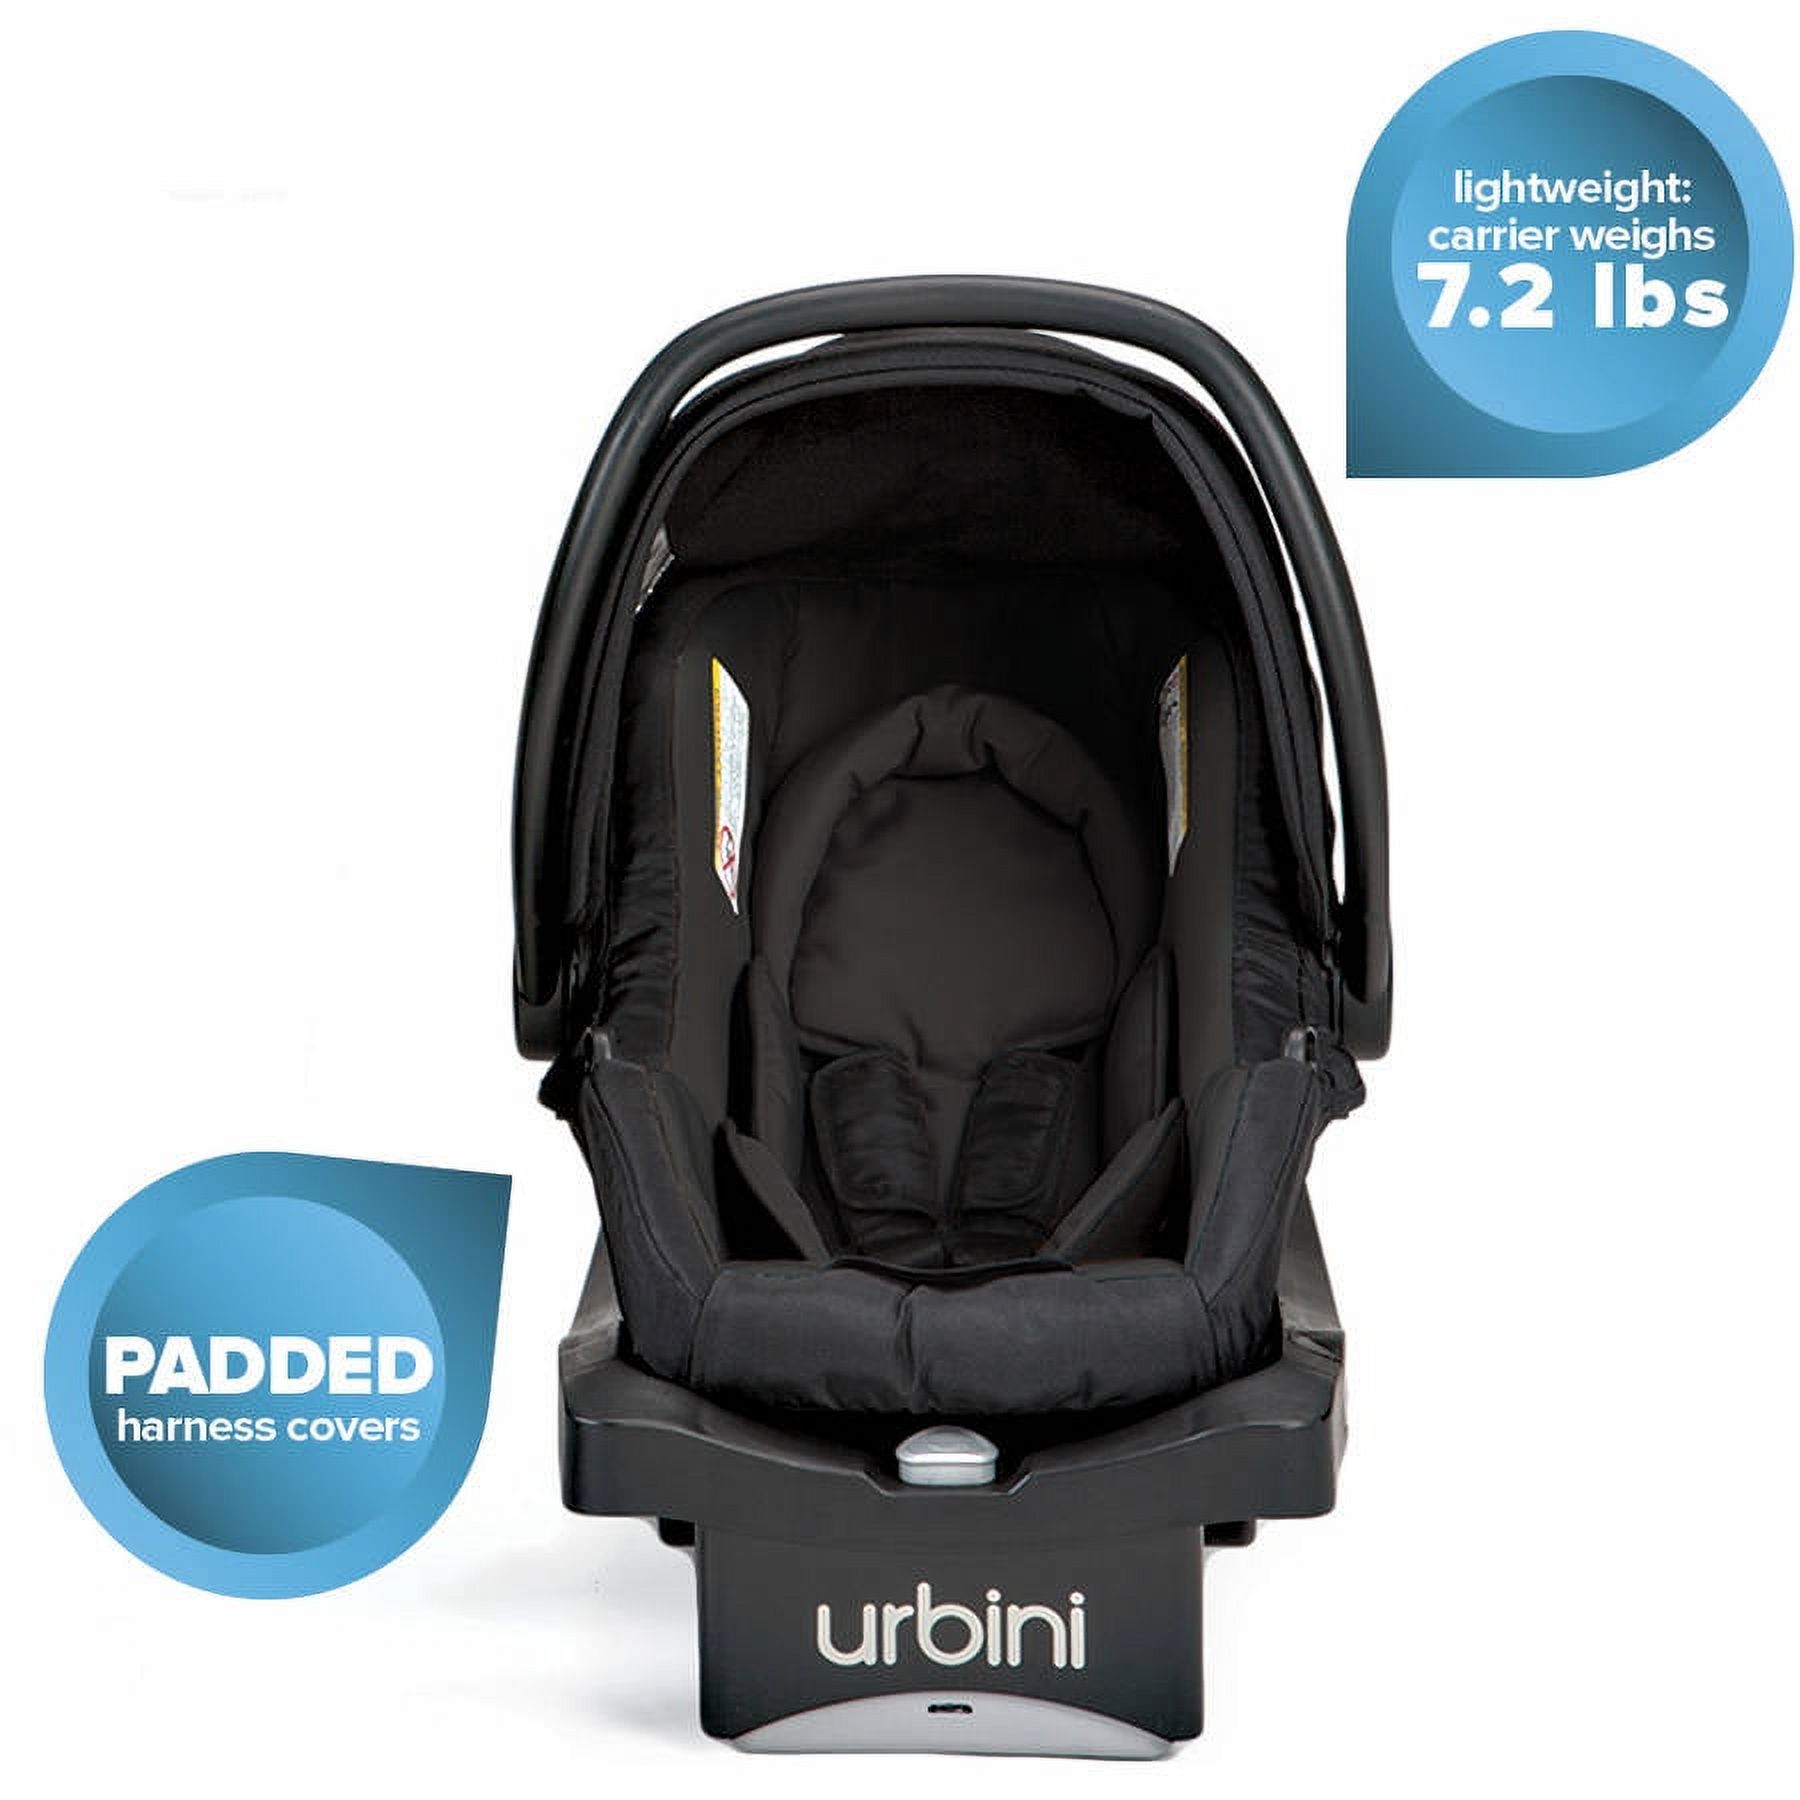 Urbini Sonti Infant Car Seat, Black - image 2 of 4